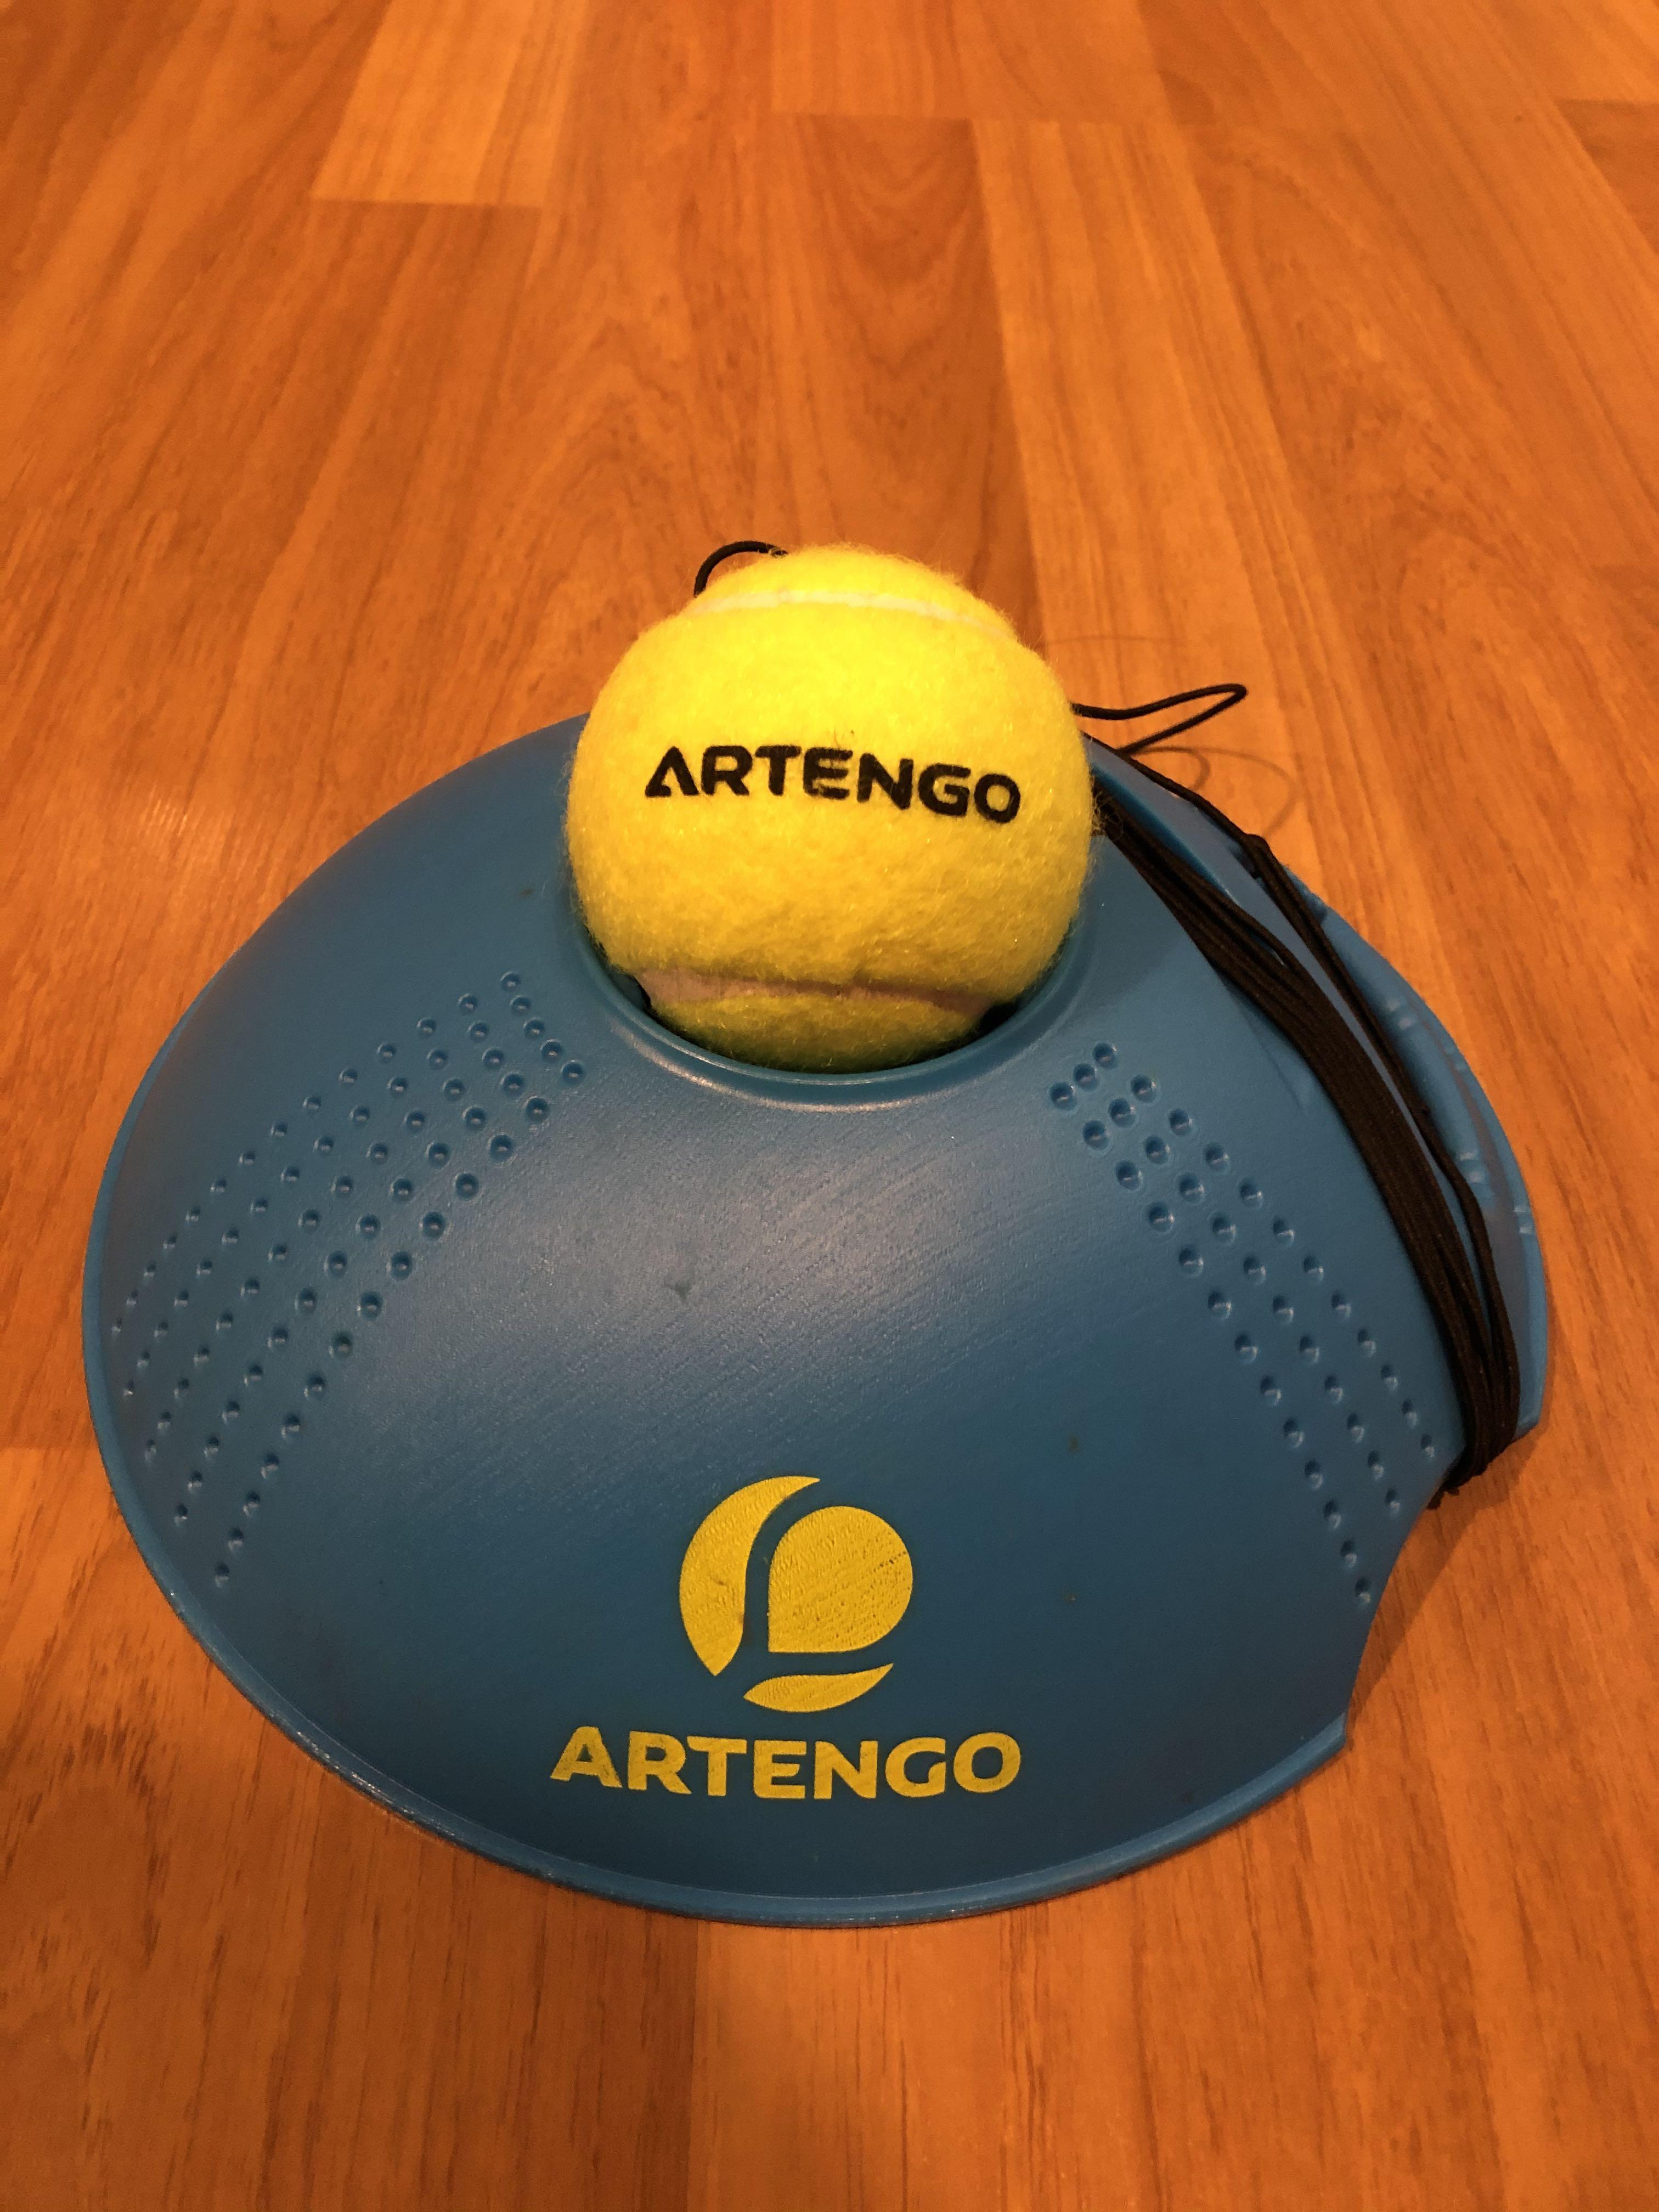 artengo balls back